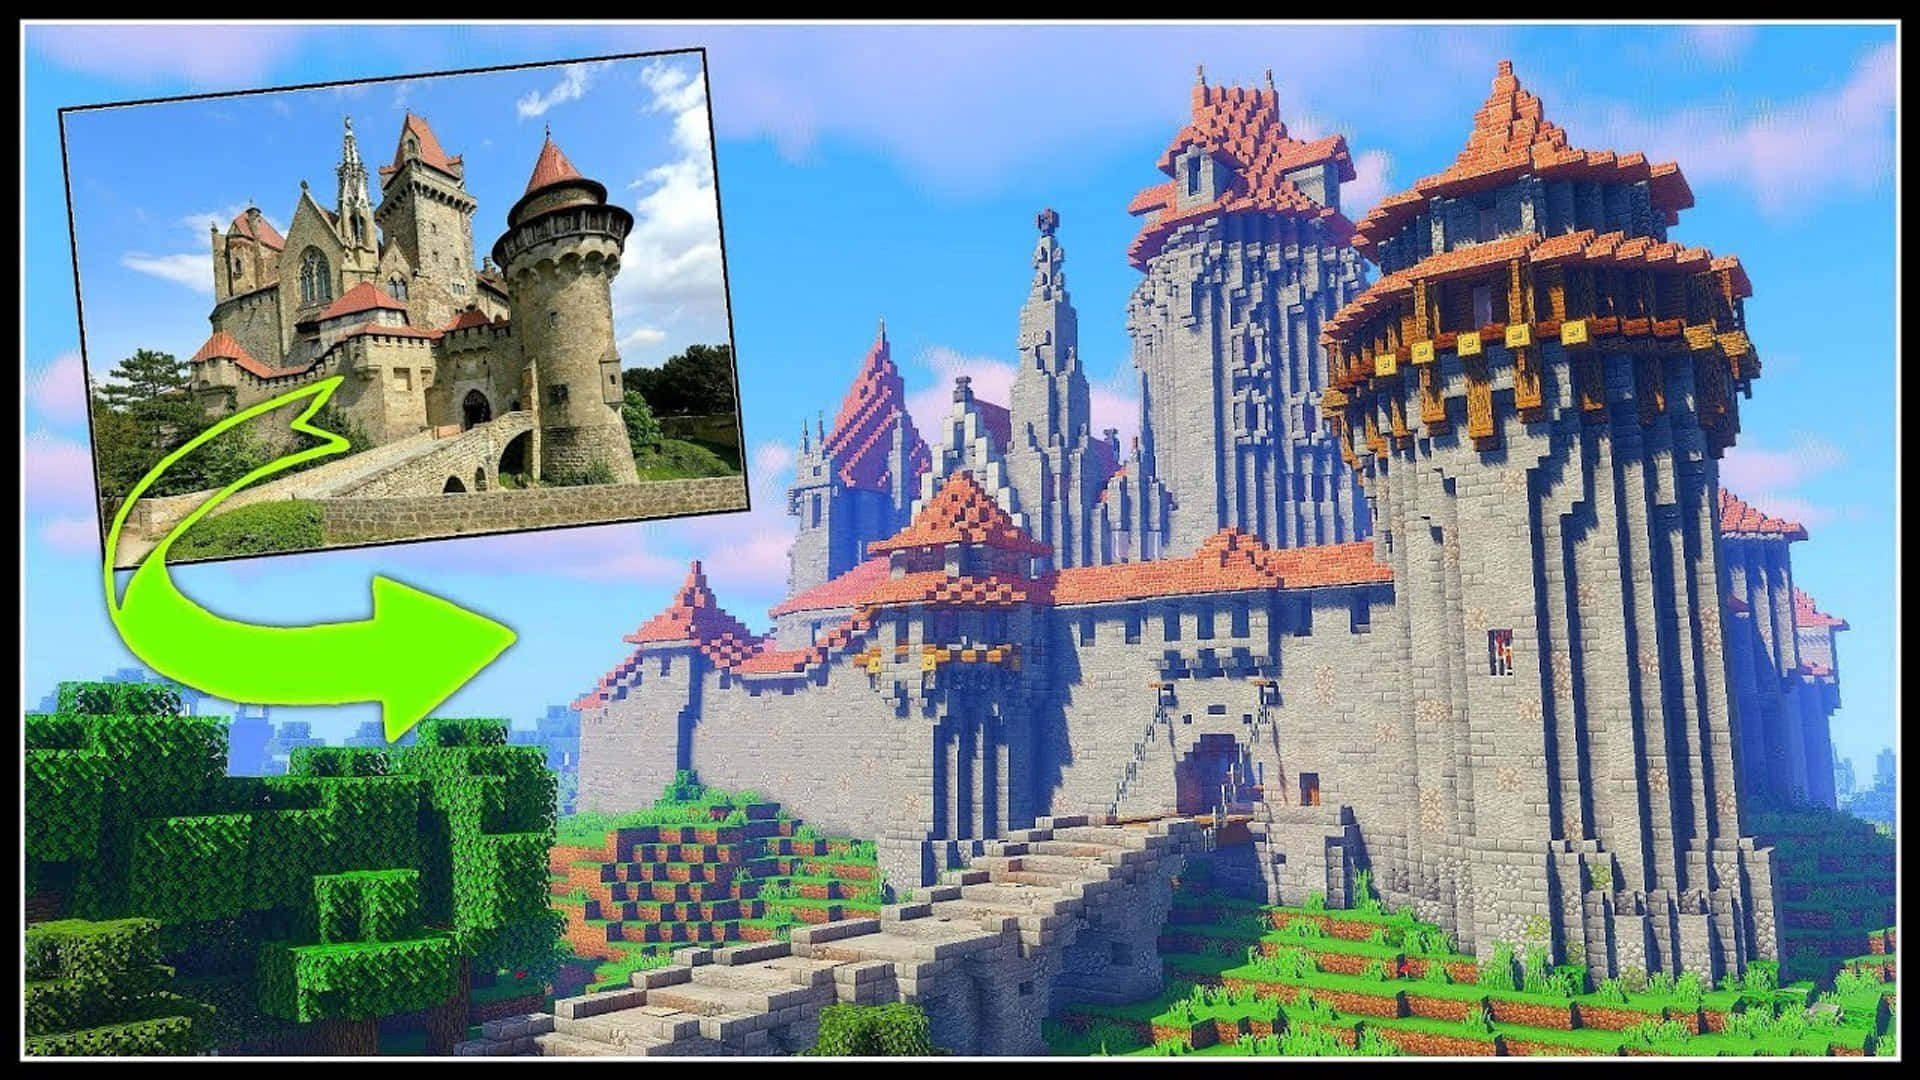 Caption: Majestic Minecraft Castle in Vibrant Landscape Wallpaper